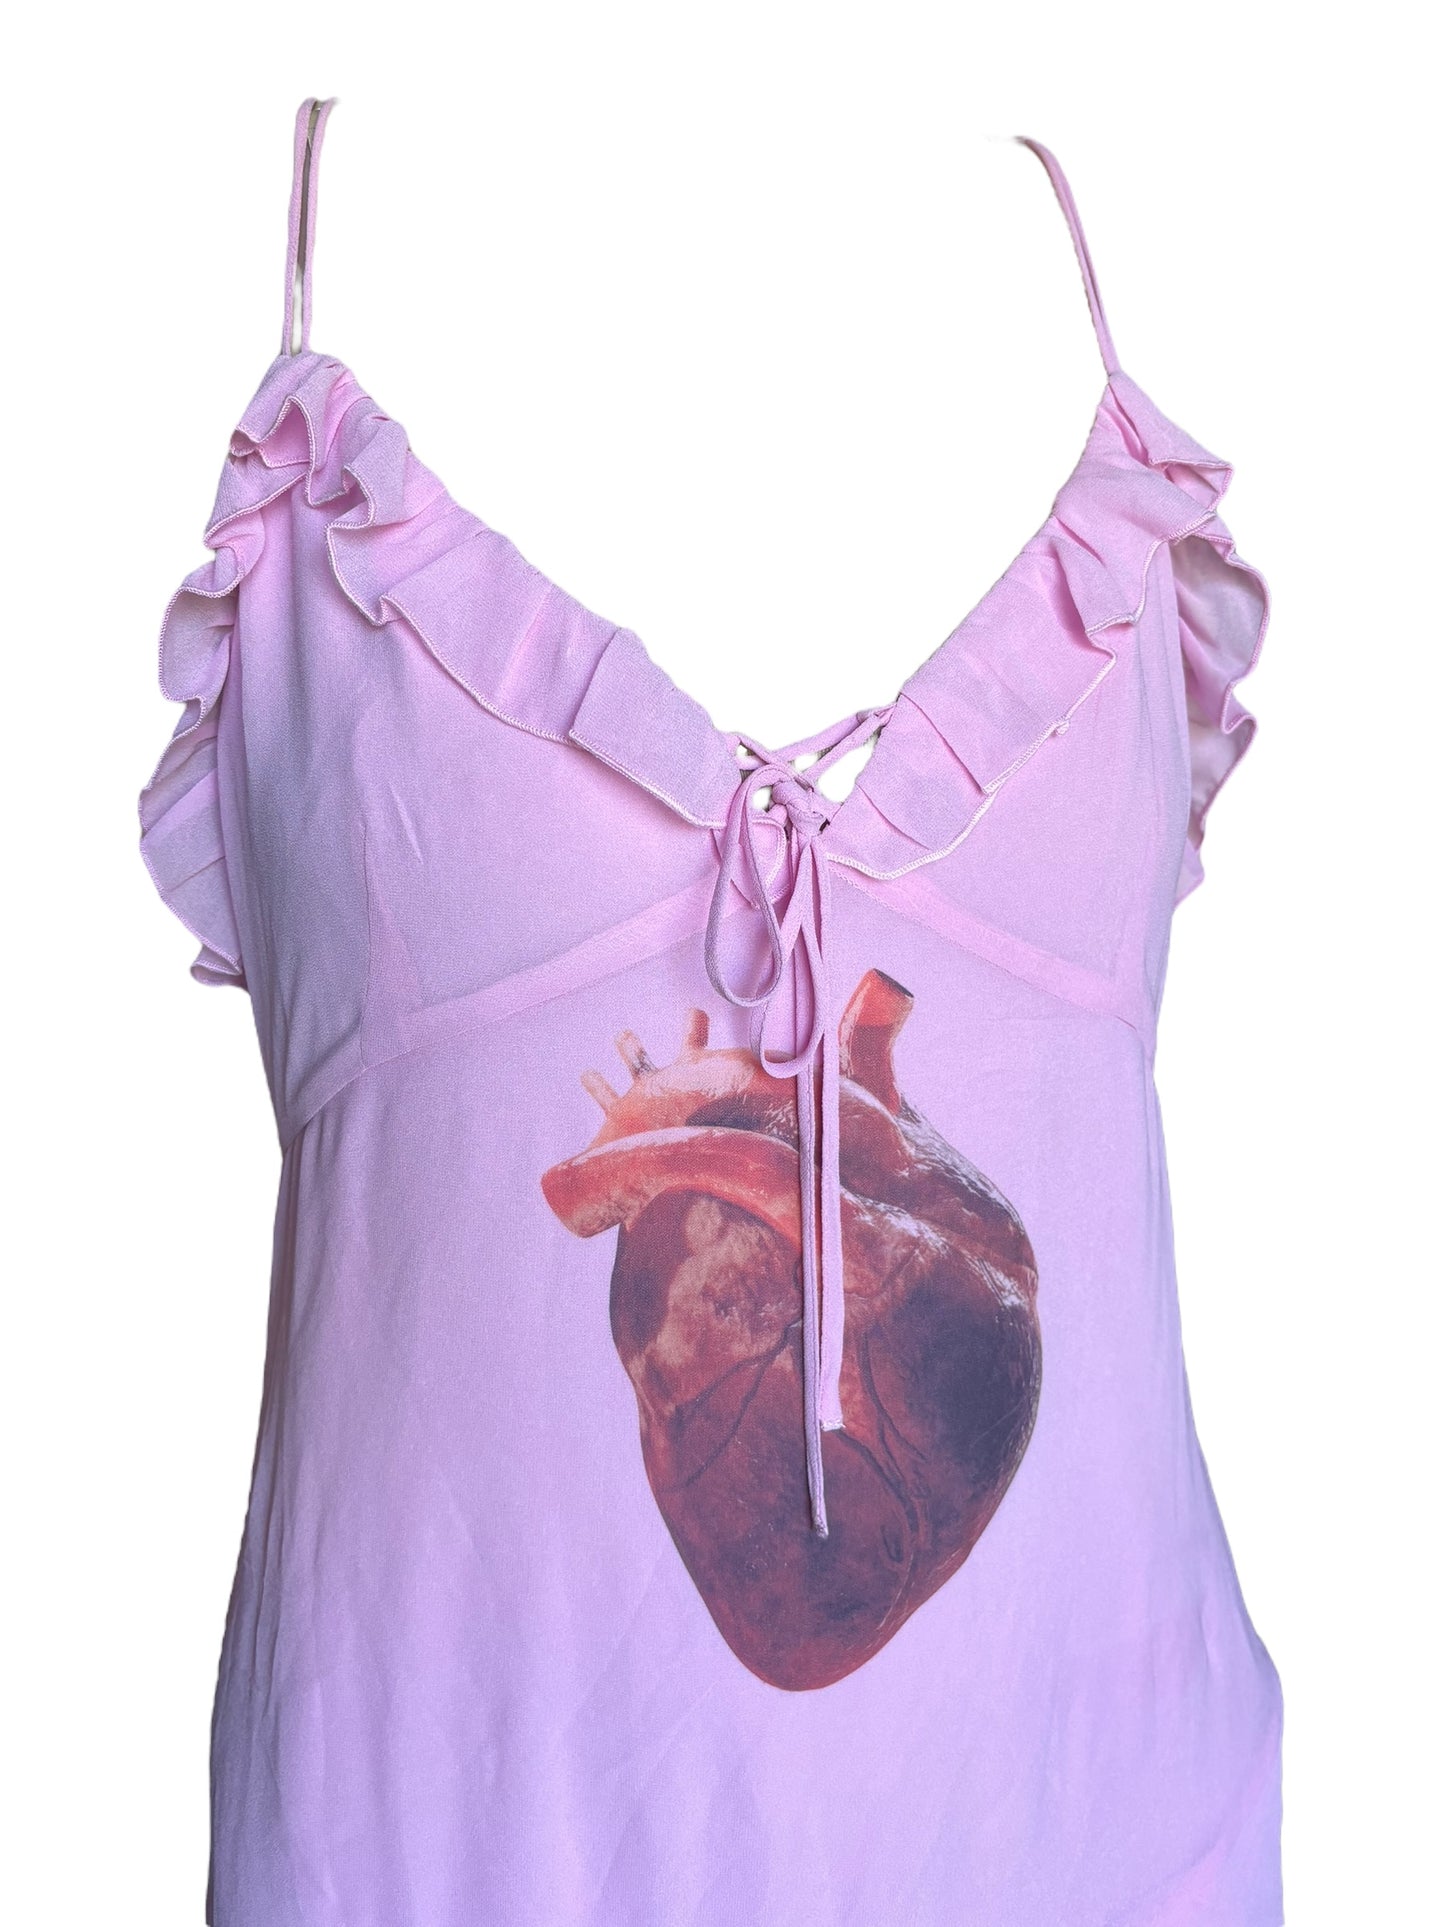 Heart of Glass Pink Dress - L